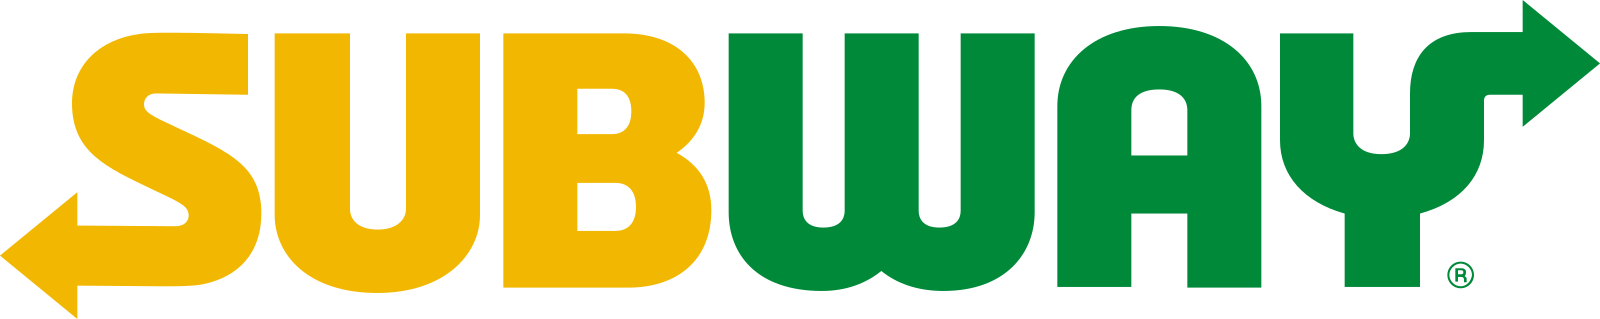 subway logo 2 - Subway Logo